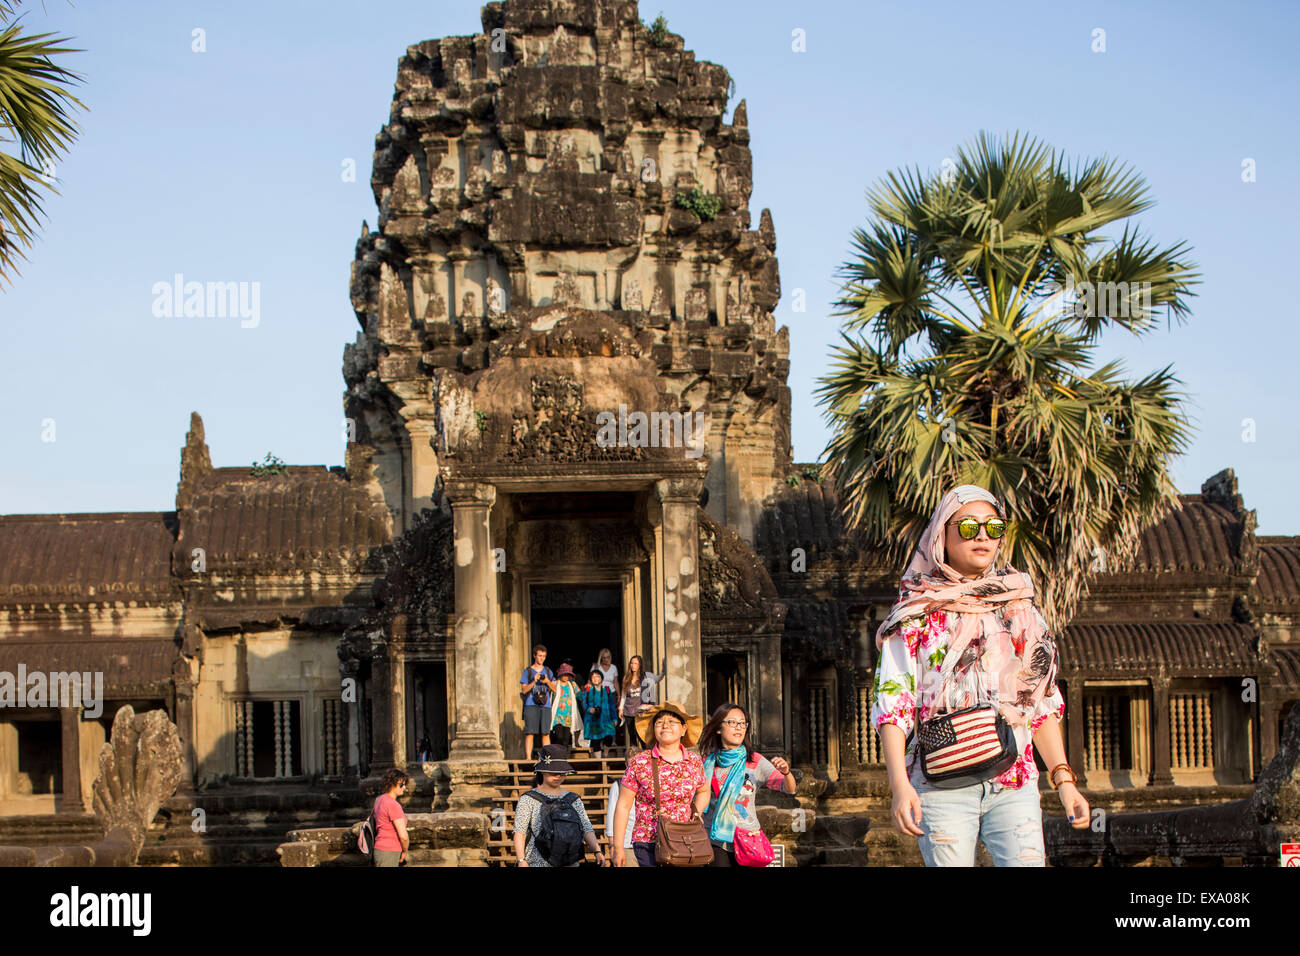 Asien, Kambodscha, Siem Reap, Angkor Wat Tempel Trägerin amerikanische Flagge Geldbörse durchläuft. Stockfoto